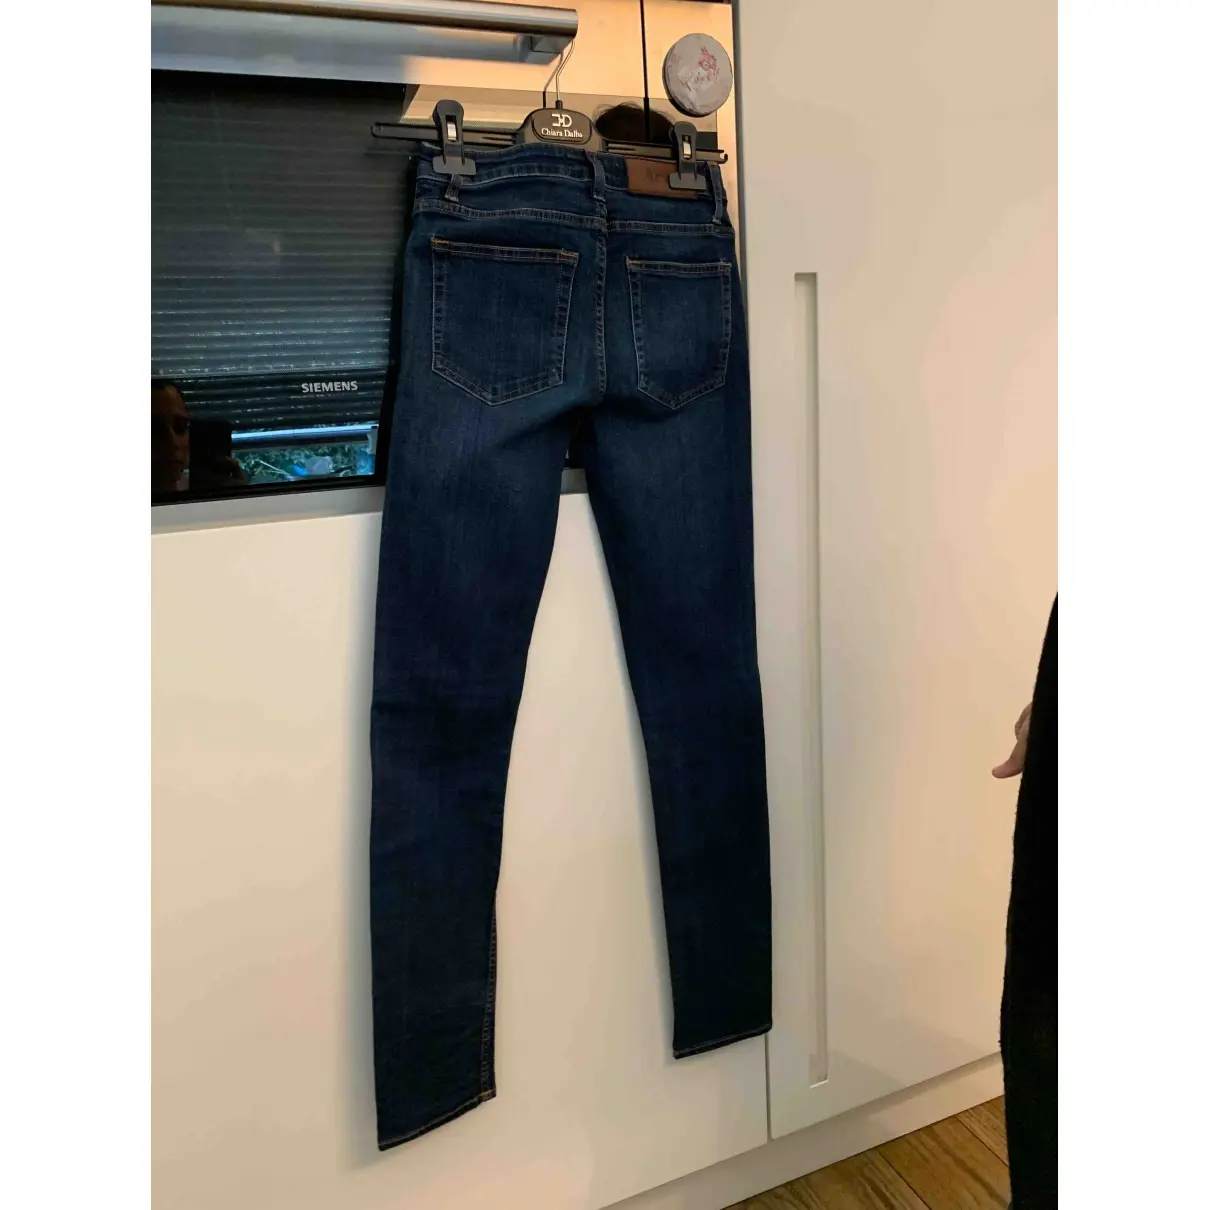 Acne Studios Flex slim jeans for sale